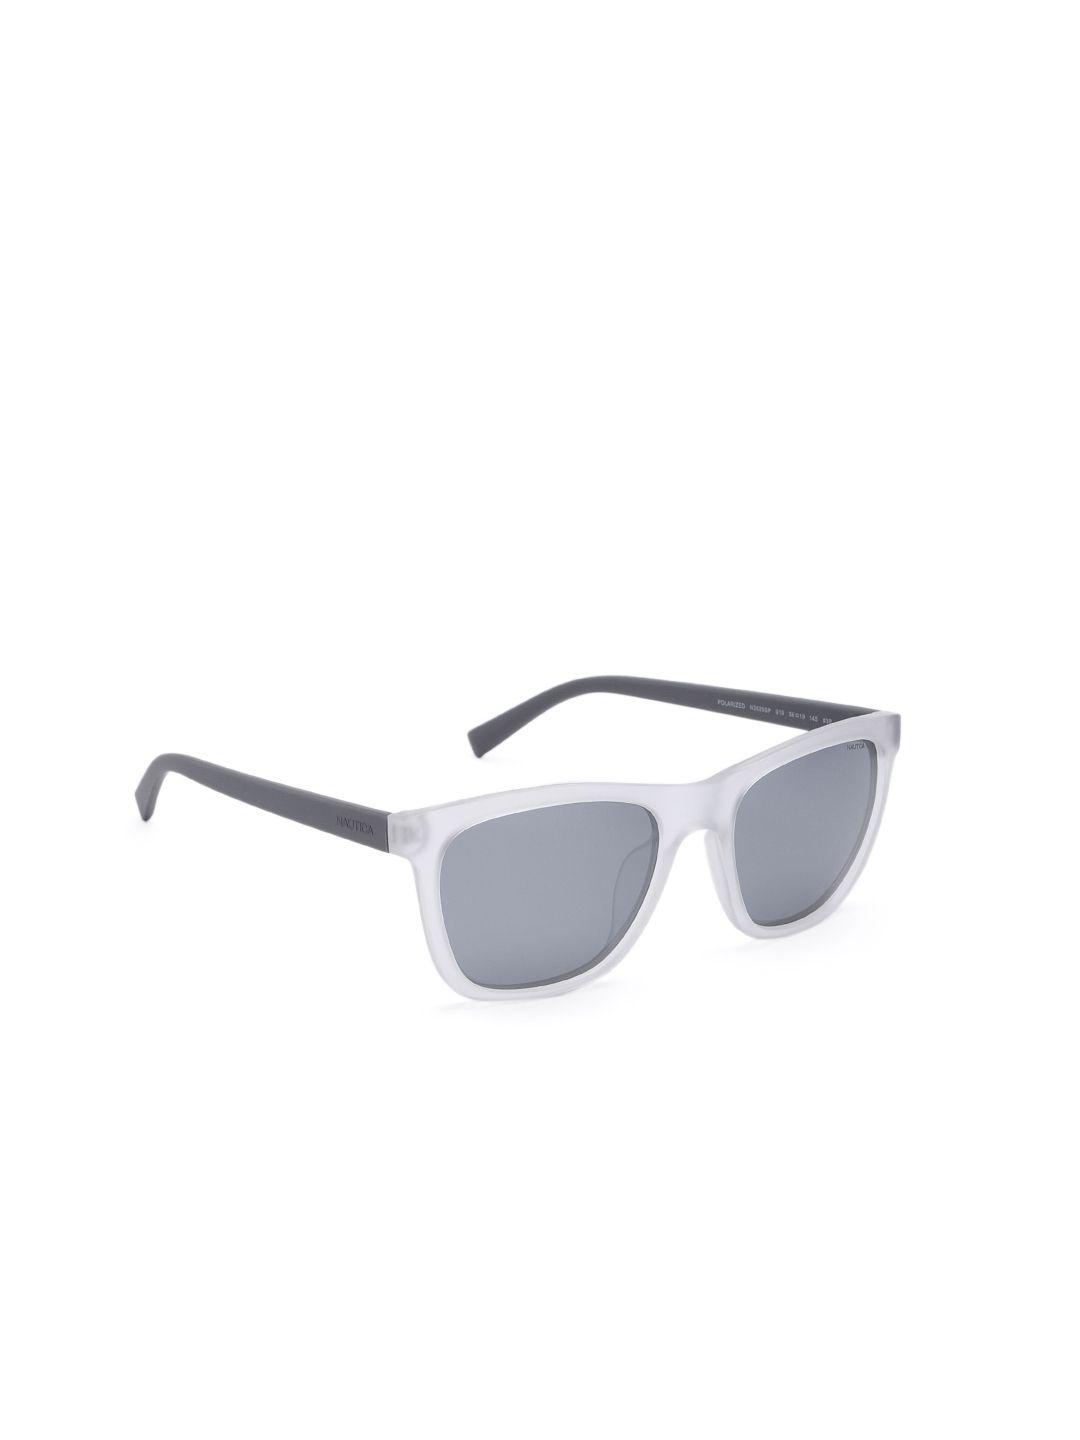 nautica men mirrored lens & wayfarer sunglasses with uv protected lens 3629p 919 56 s